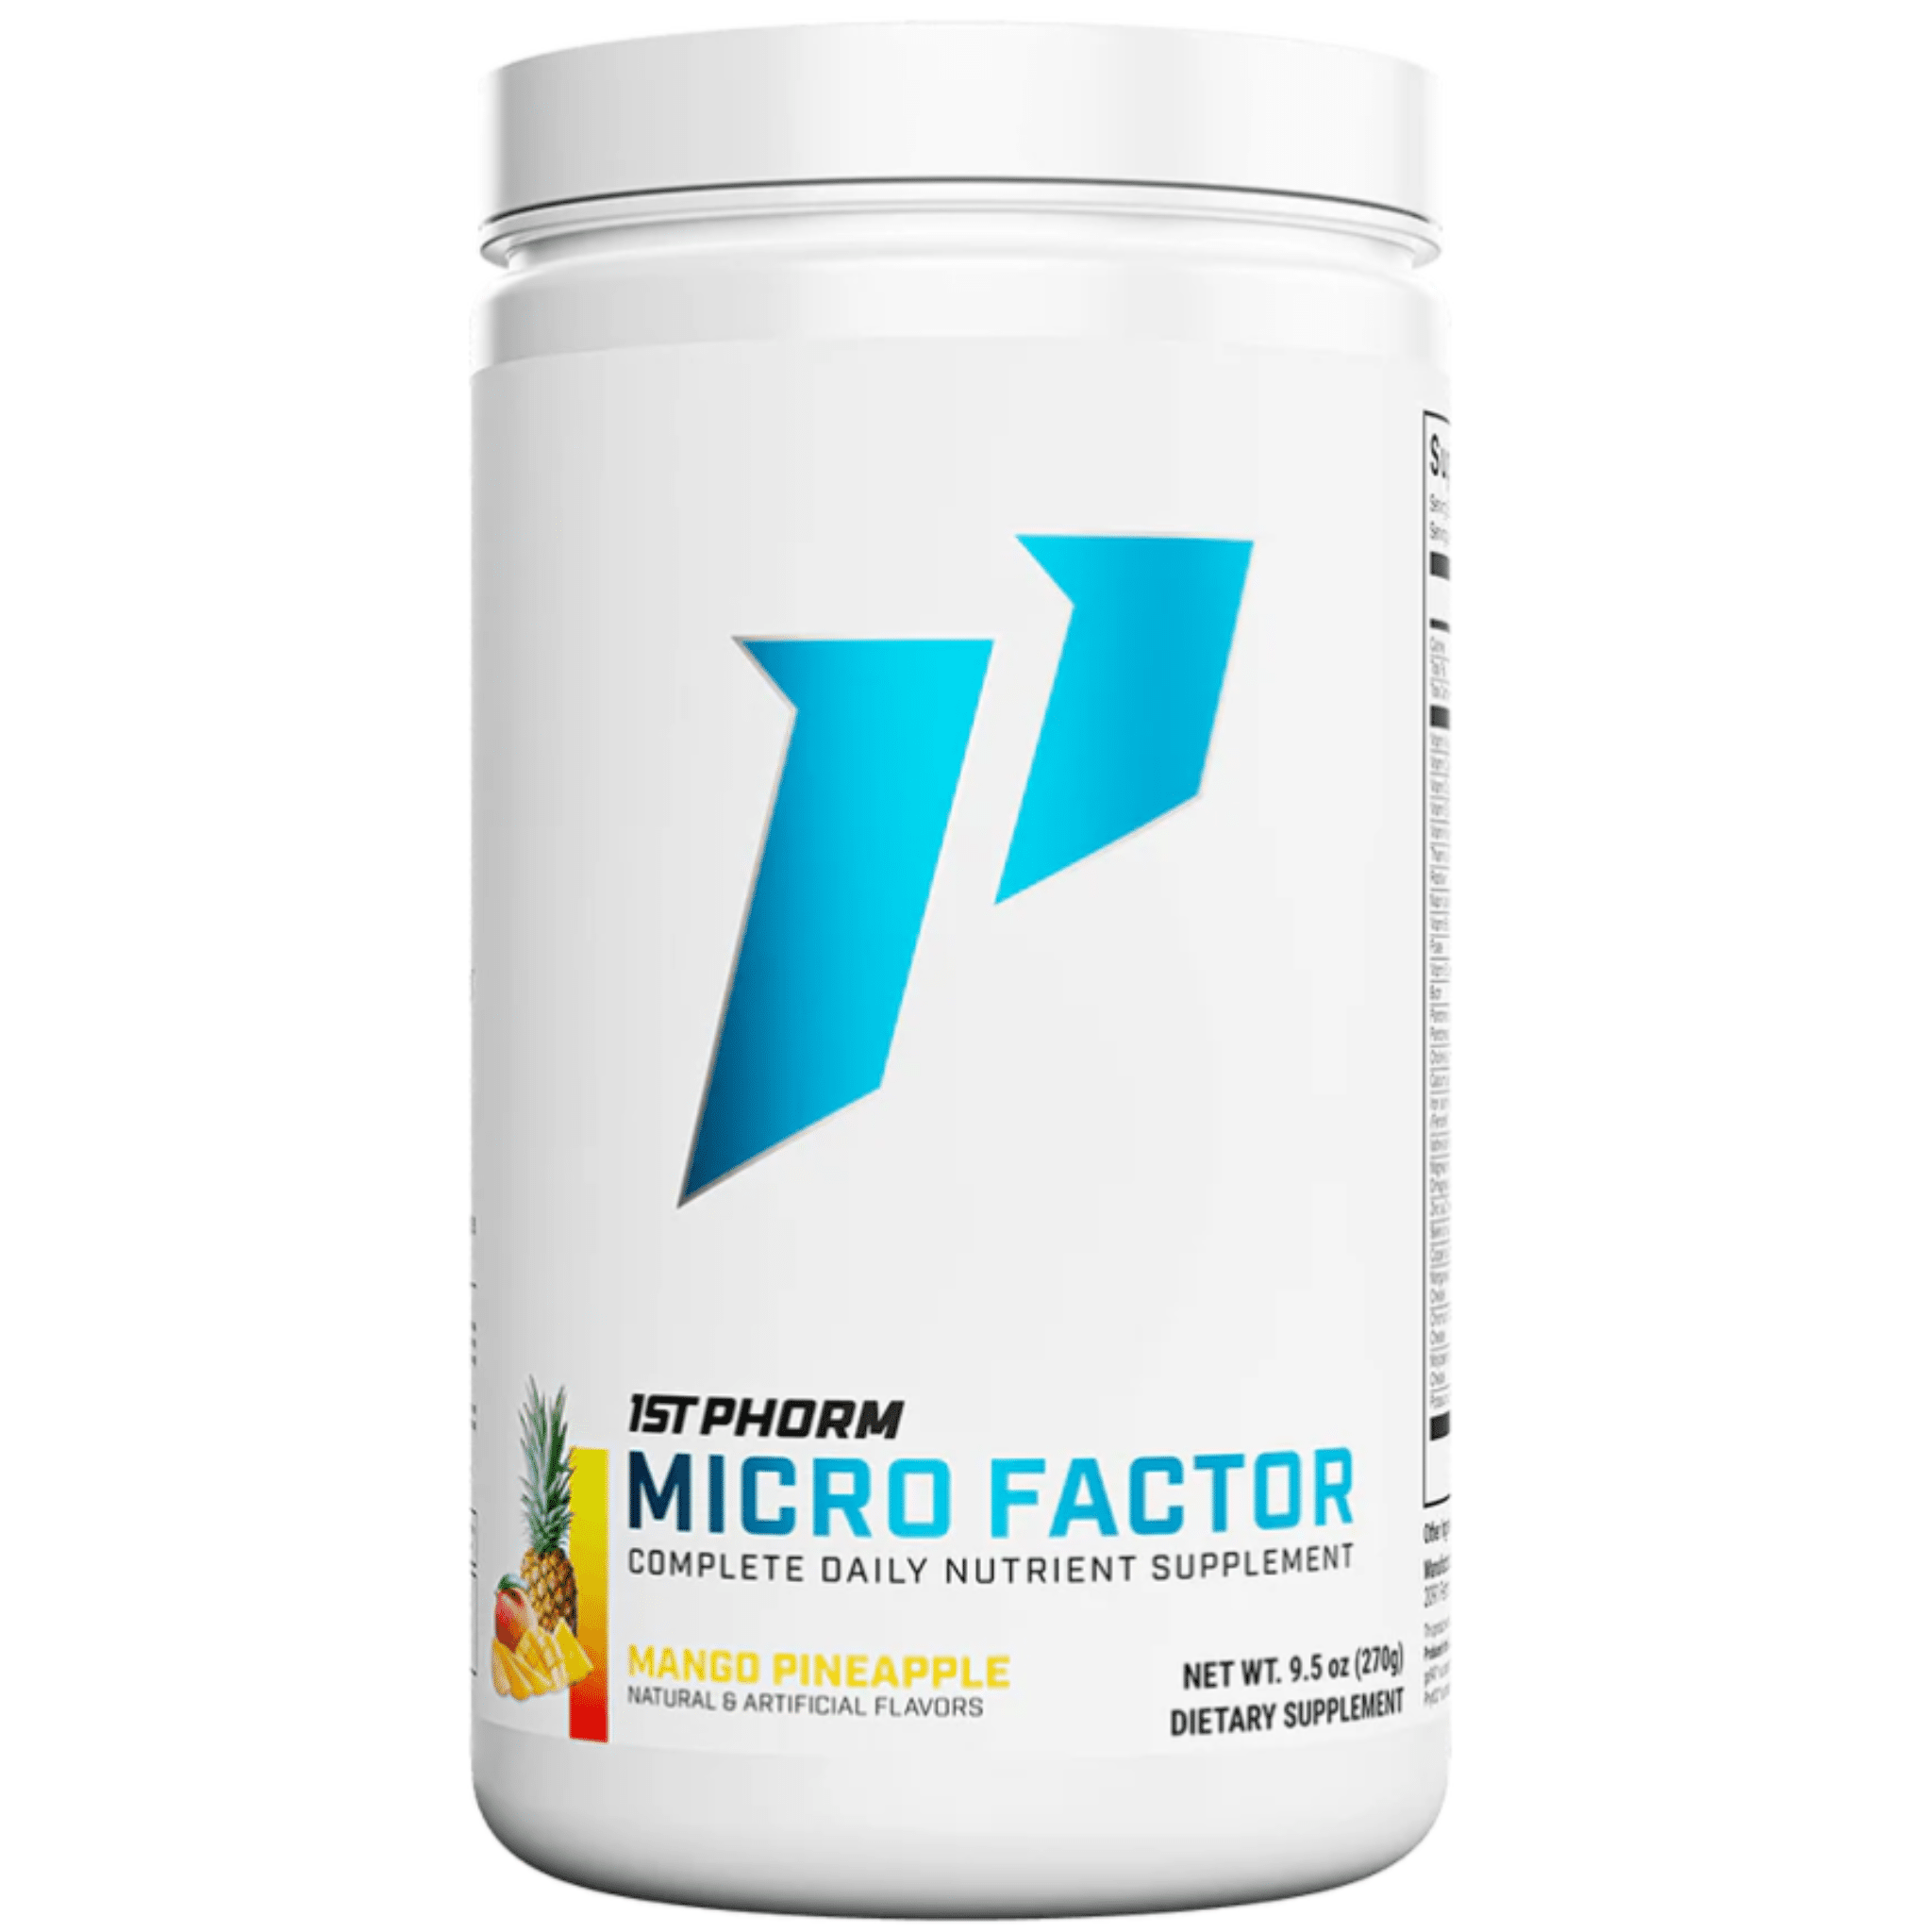 1st Phorm Micro Factor Powder